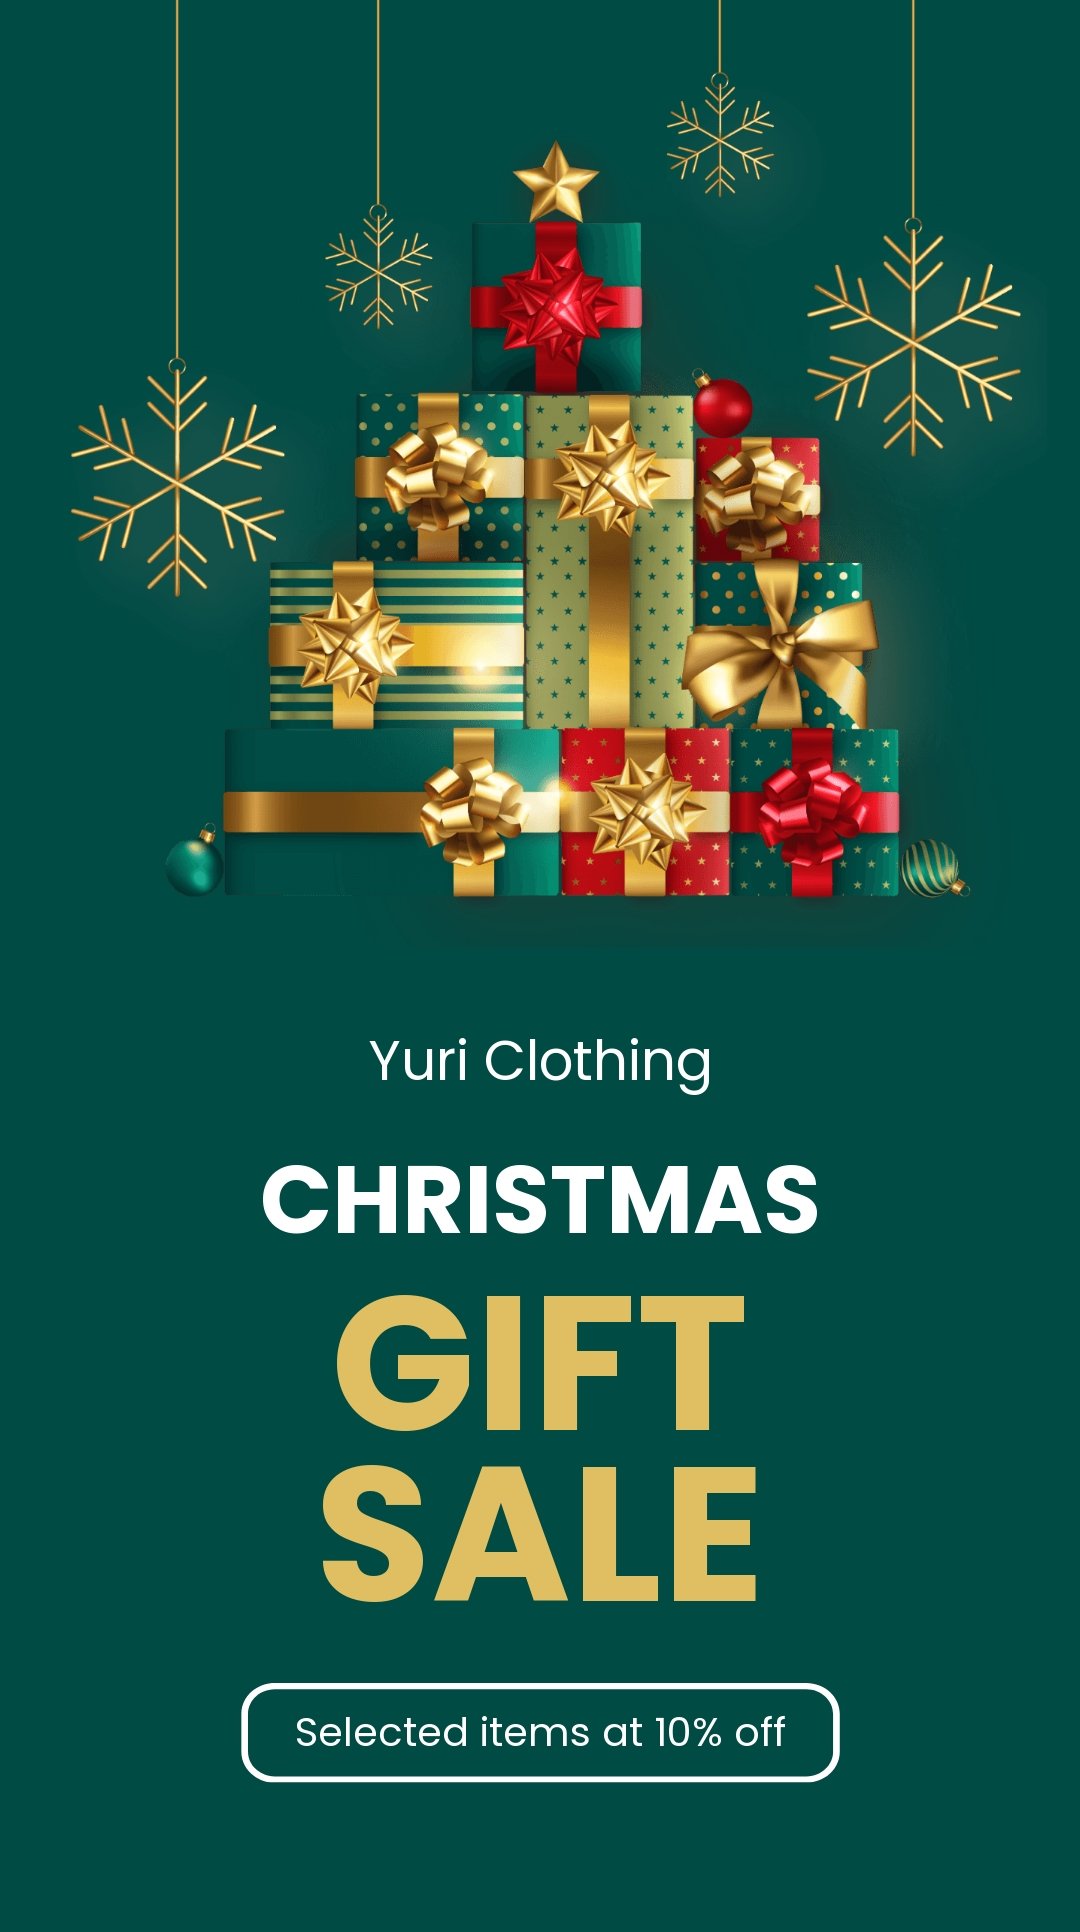 Free Christmas Gift Sale Whatsapp Post Template